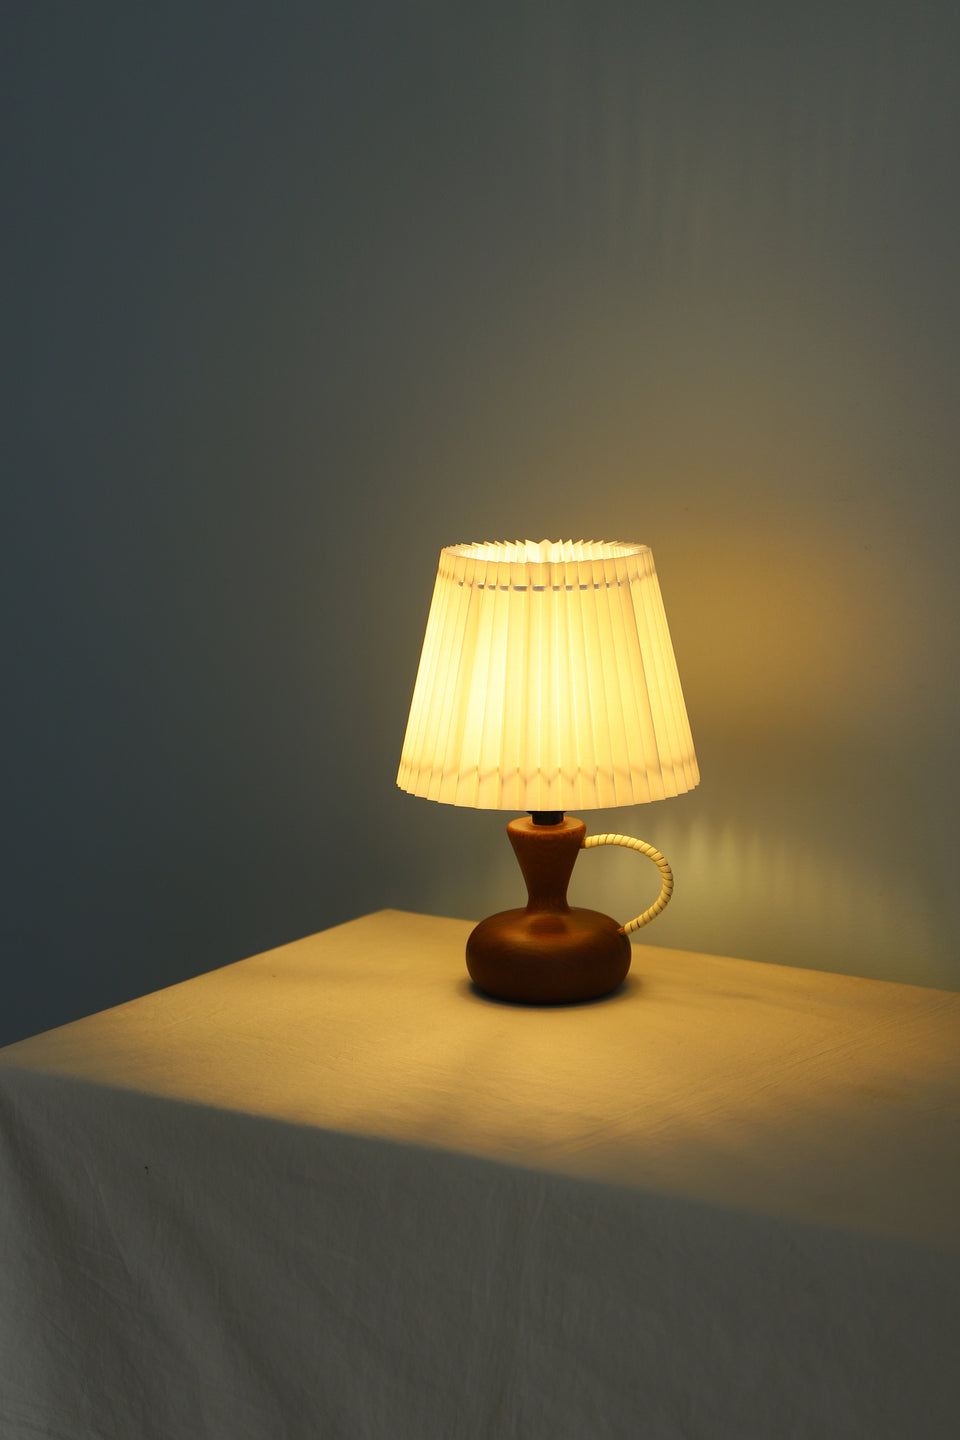 Teakwood Small Vase Table Lamp Danish Vintage/デンマークヴィンテージ スモールテーブルランプ チーク材 間接照明 北欧インテリア